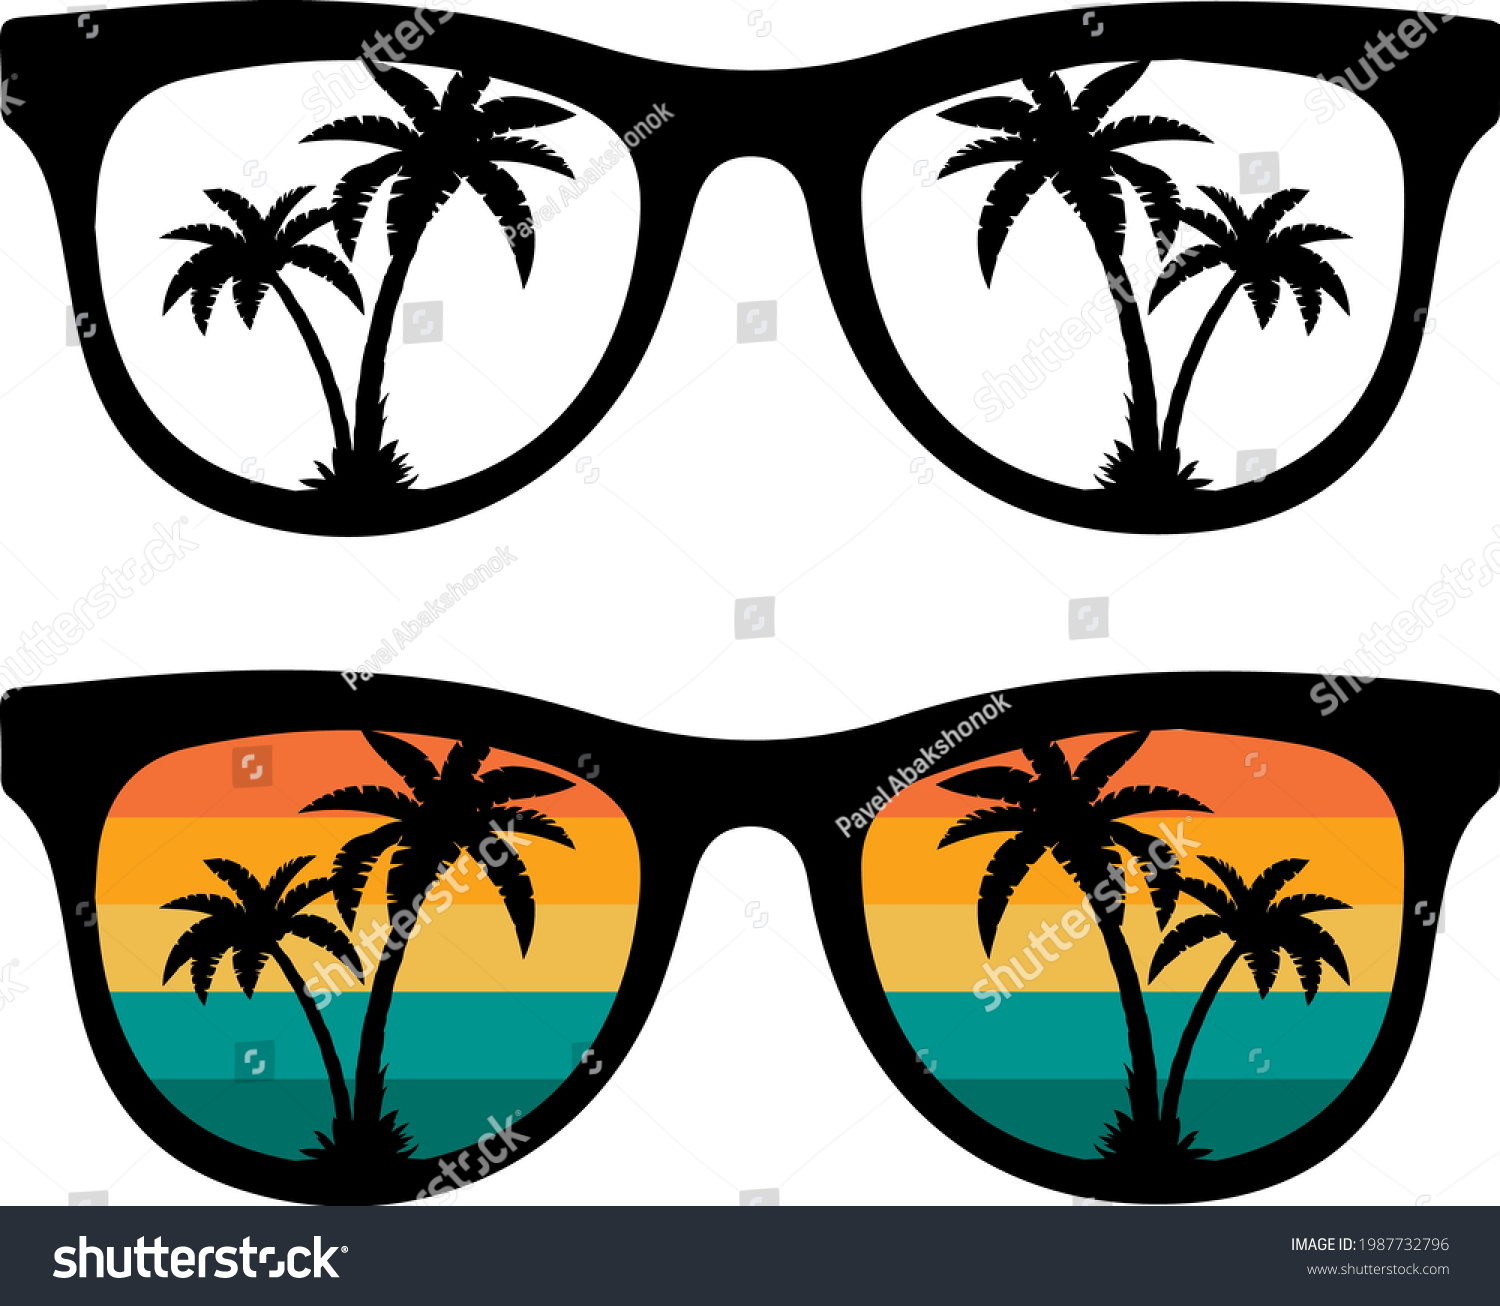 SVG of Summer retro sunglasses svg image  isolated on white background. Sunglasses with retro sun. Retro Vintage Sunset Sunglasses shirt design. Sunglasses with palms tree silhouette. svg